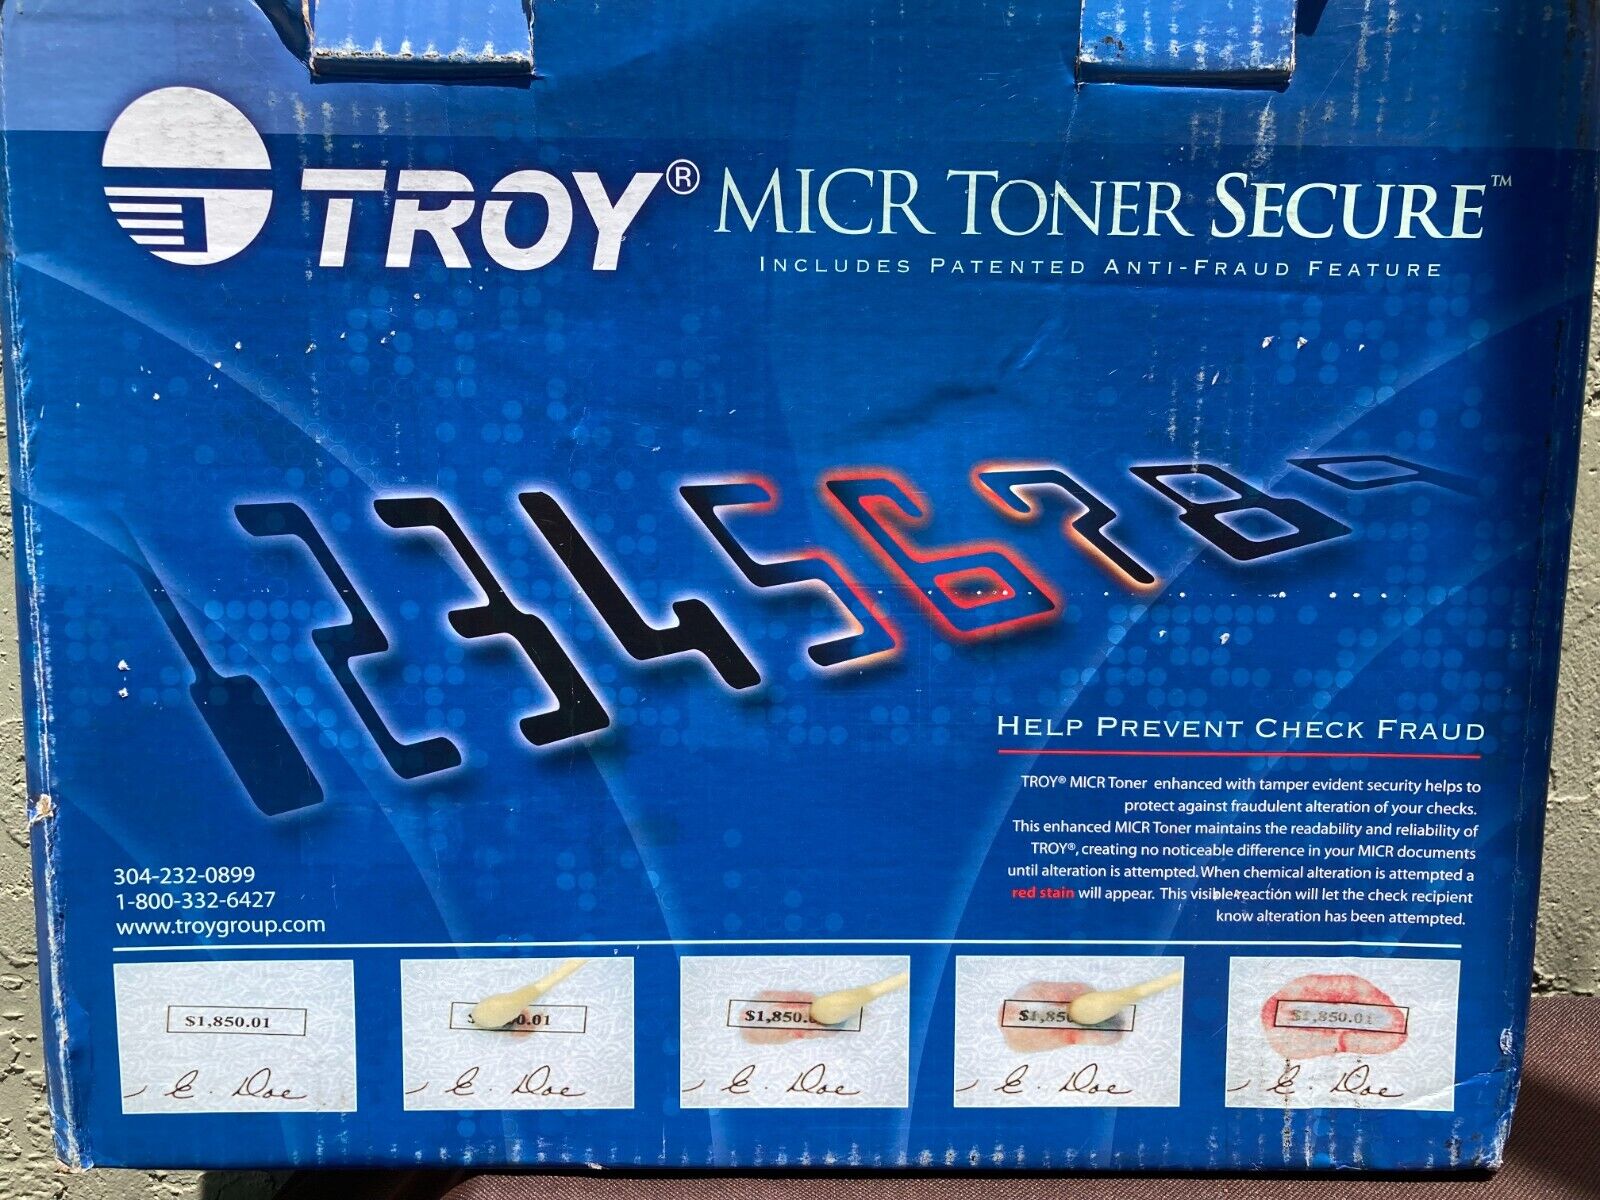 ** GENUINE** TROY 602/603 MICR Toner Secure High Yield Cartridge 02-81351-001